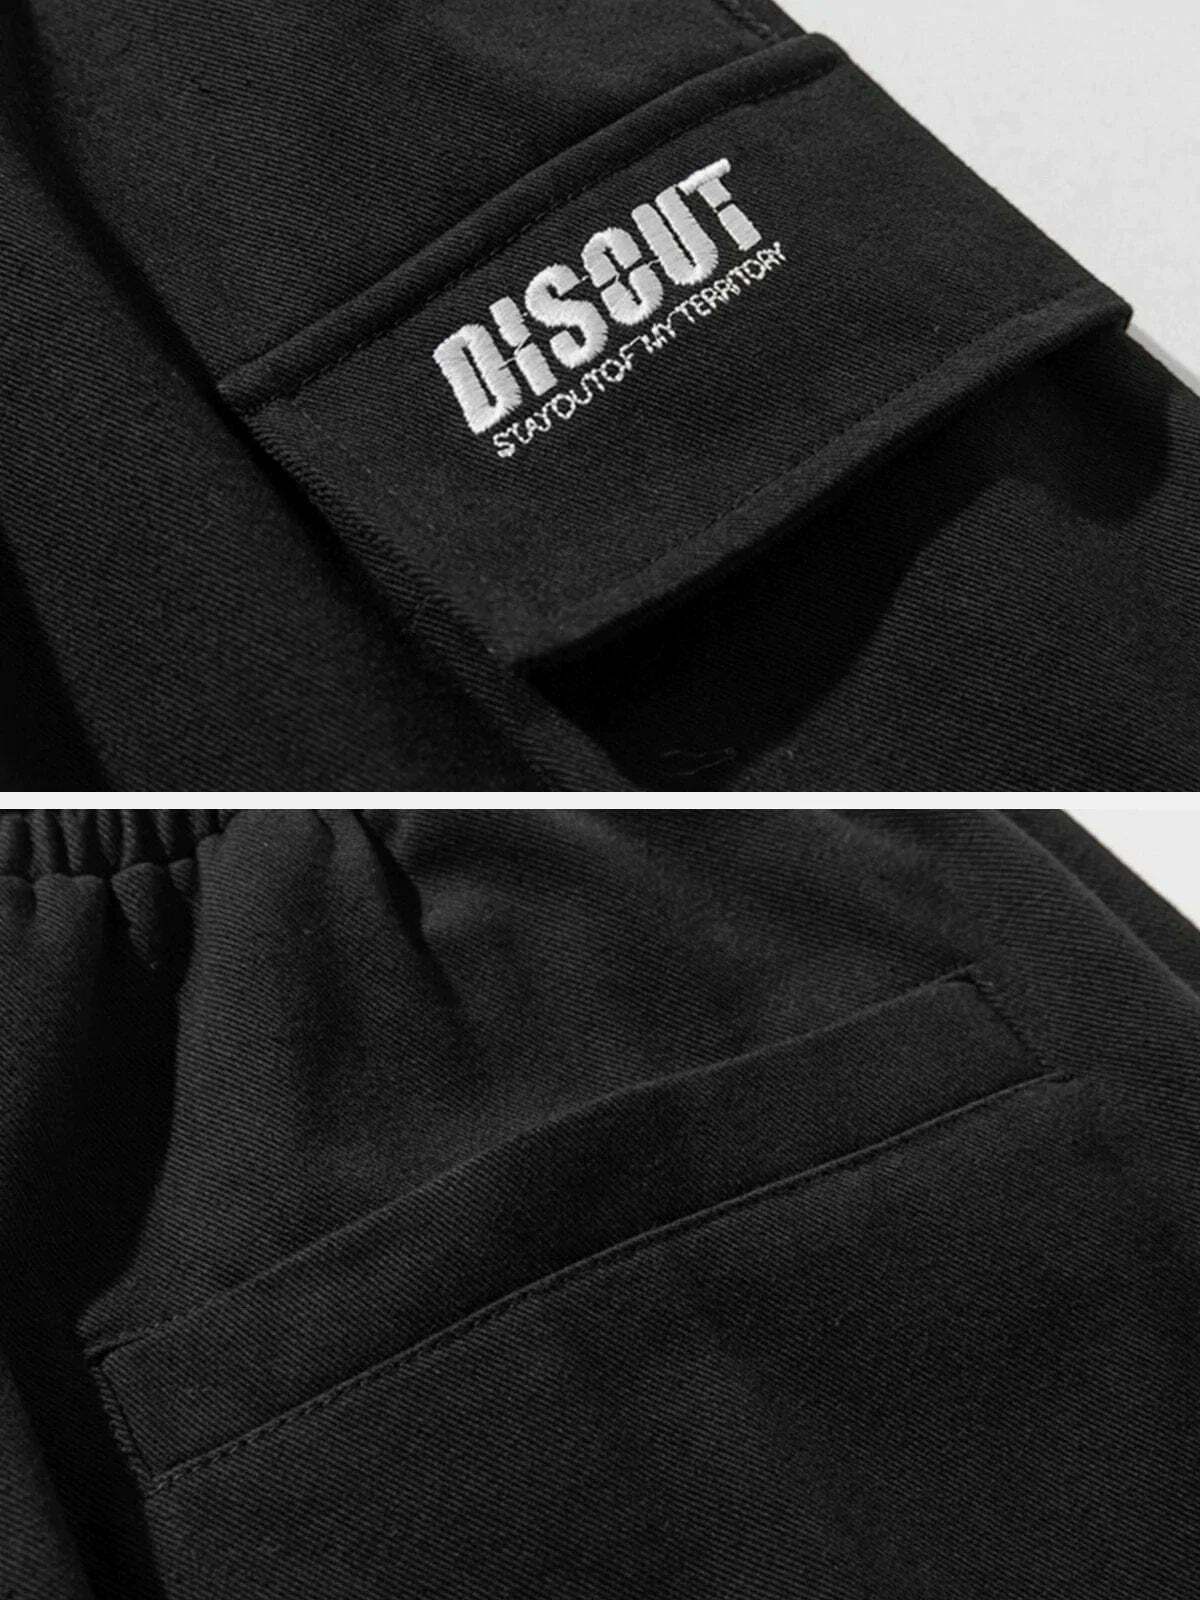 discreet side pocket shorts urban functional essential 4777